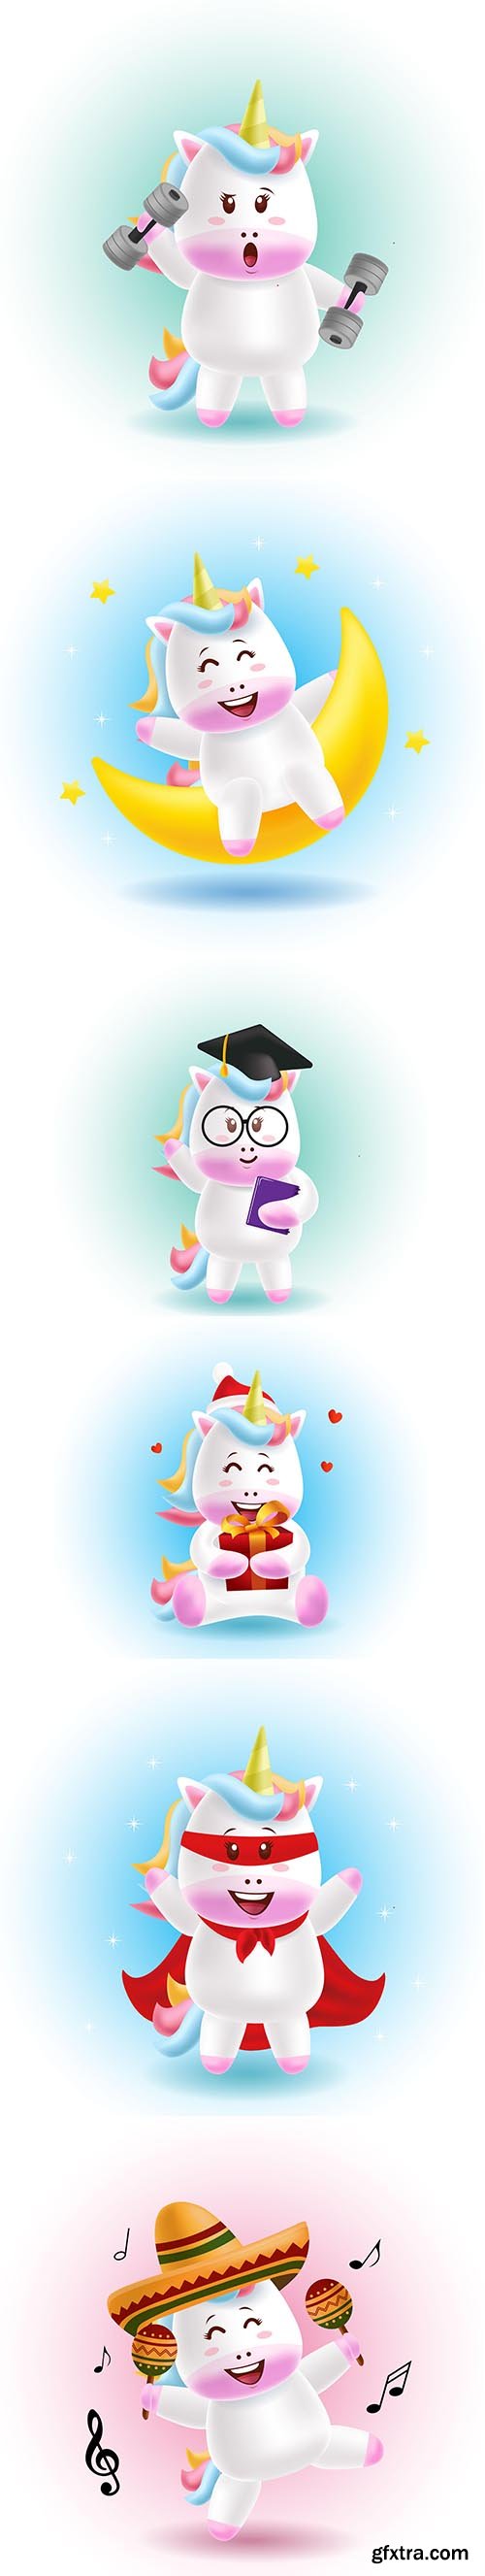 Mascot cartoon cute unicorn